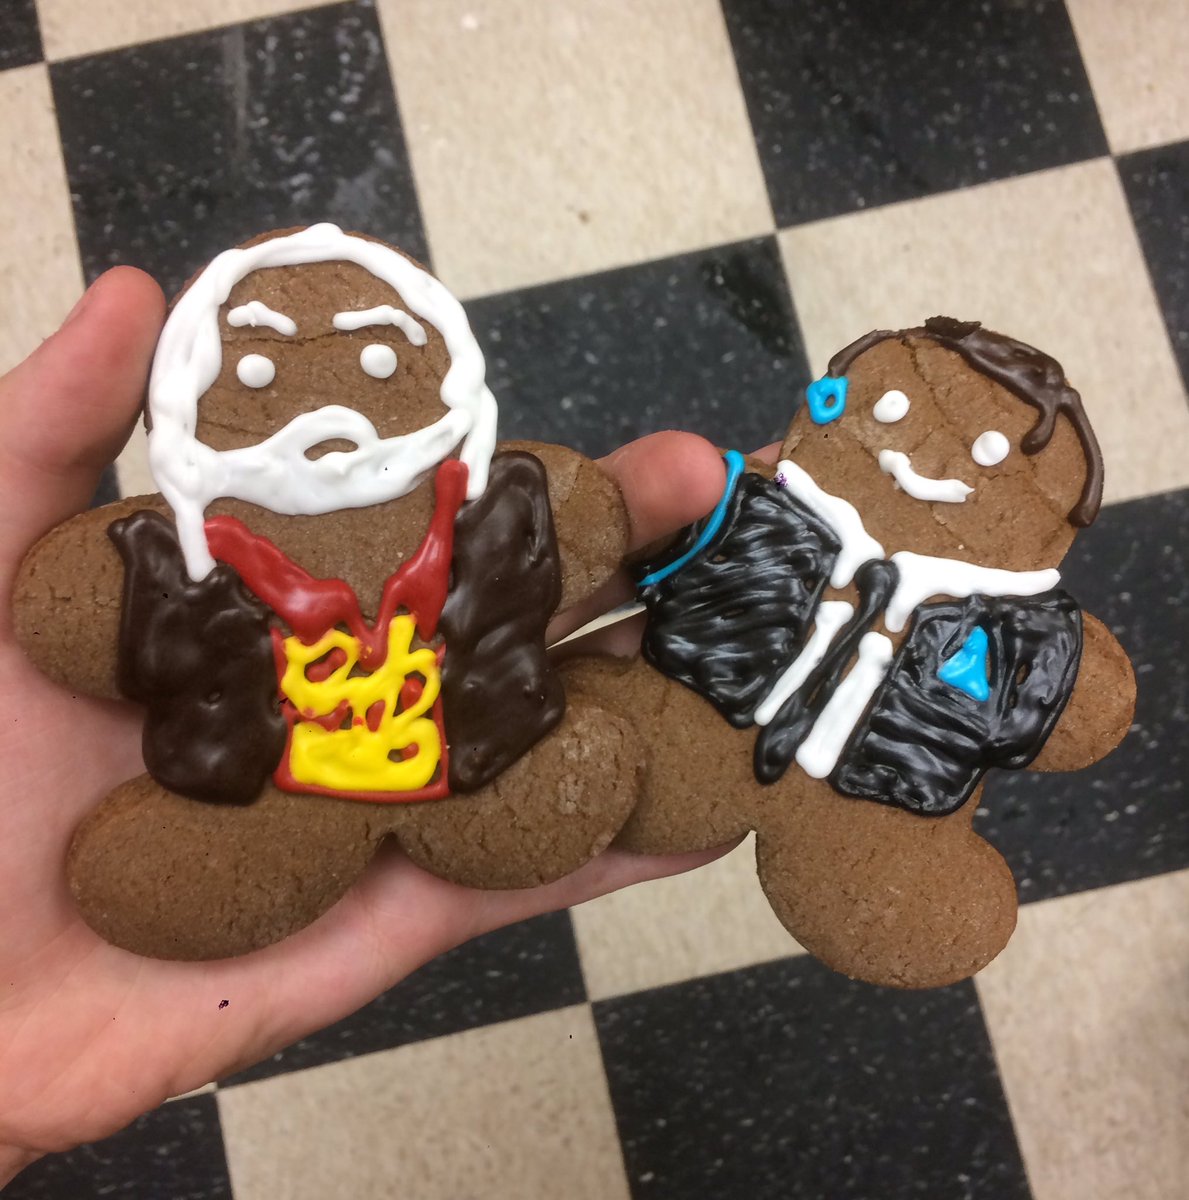 Hank and Connor Gingerbread.. run run run, little deviant
#DetroitBecomeHuman #dbh #ConnorArmy #connordbh #hankdbh